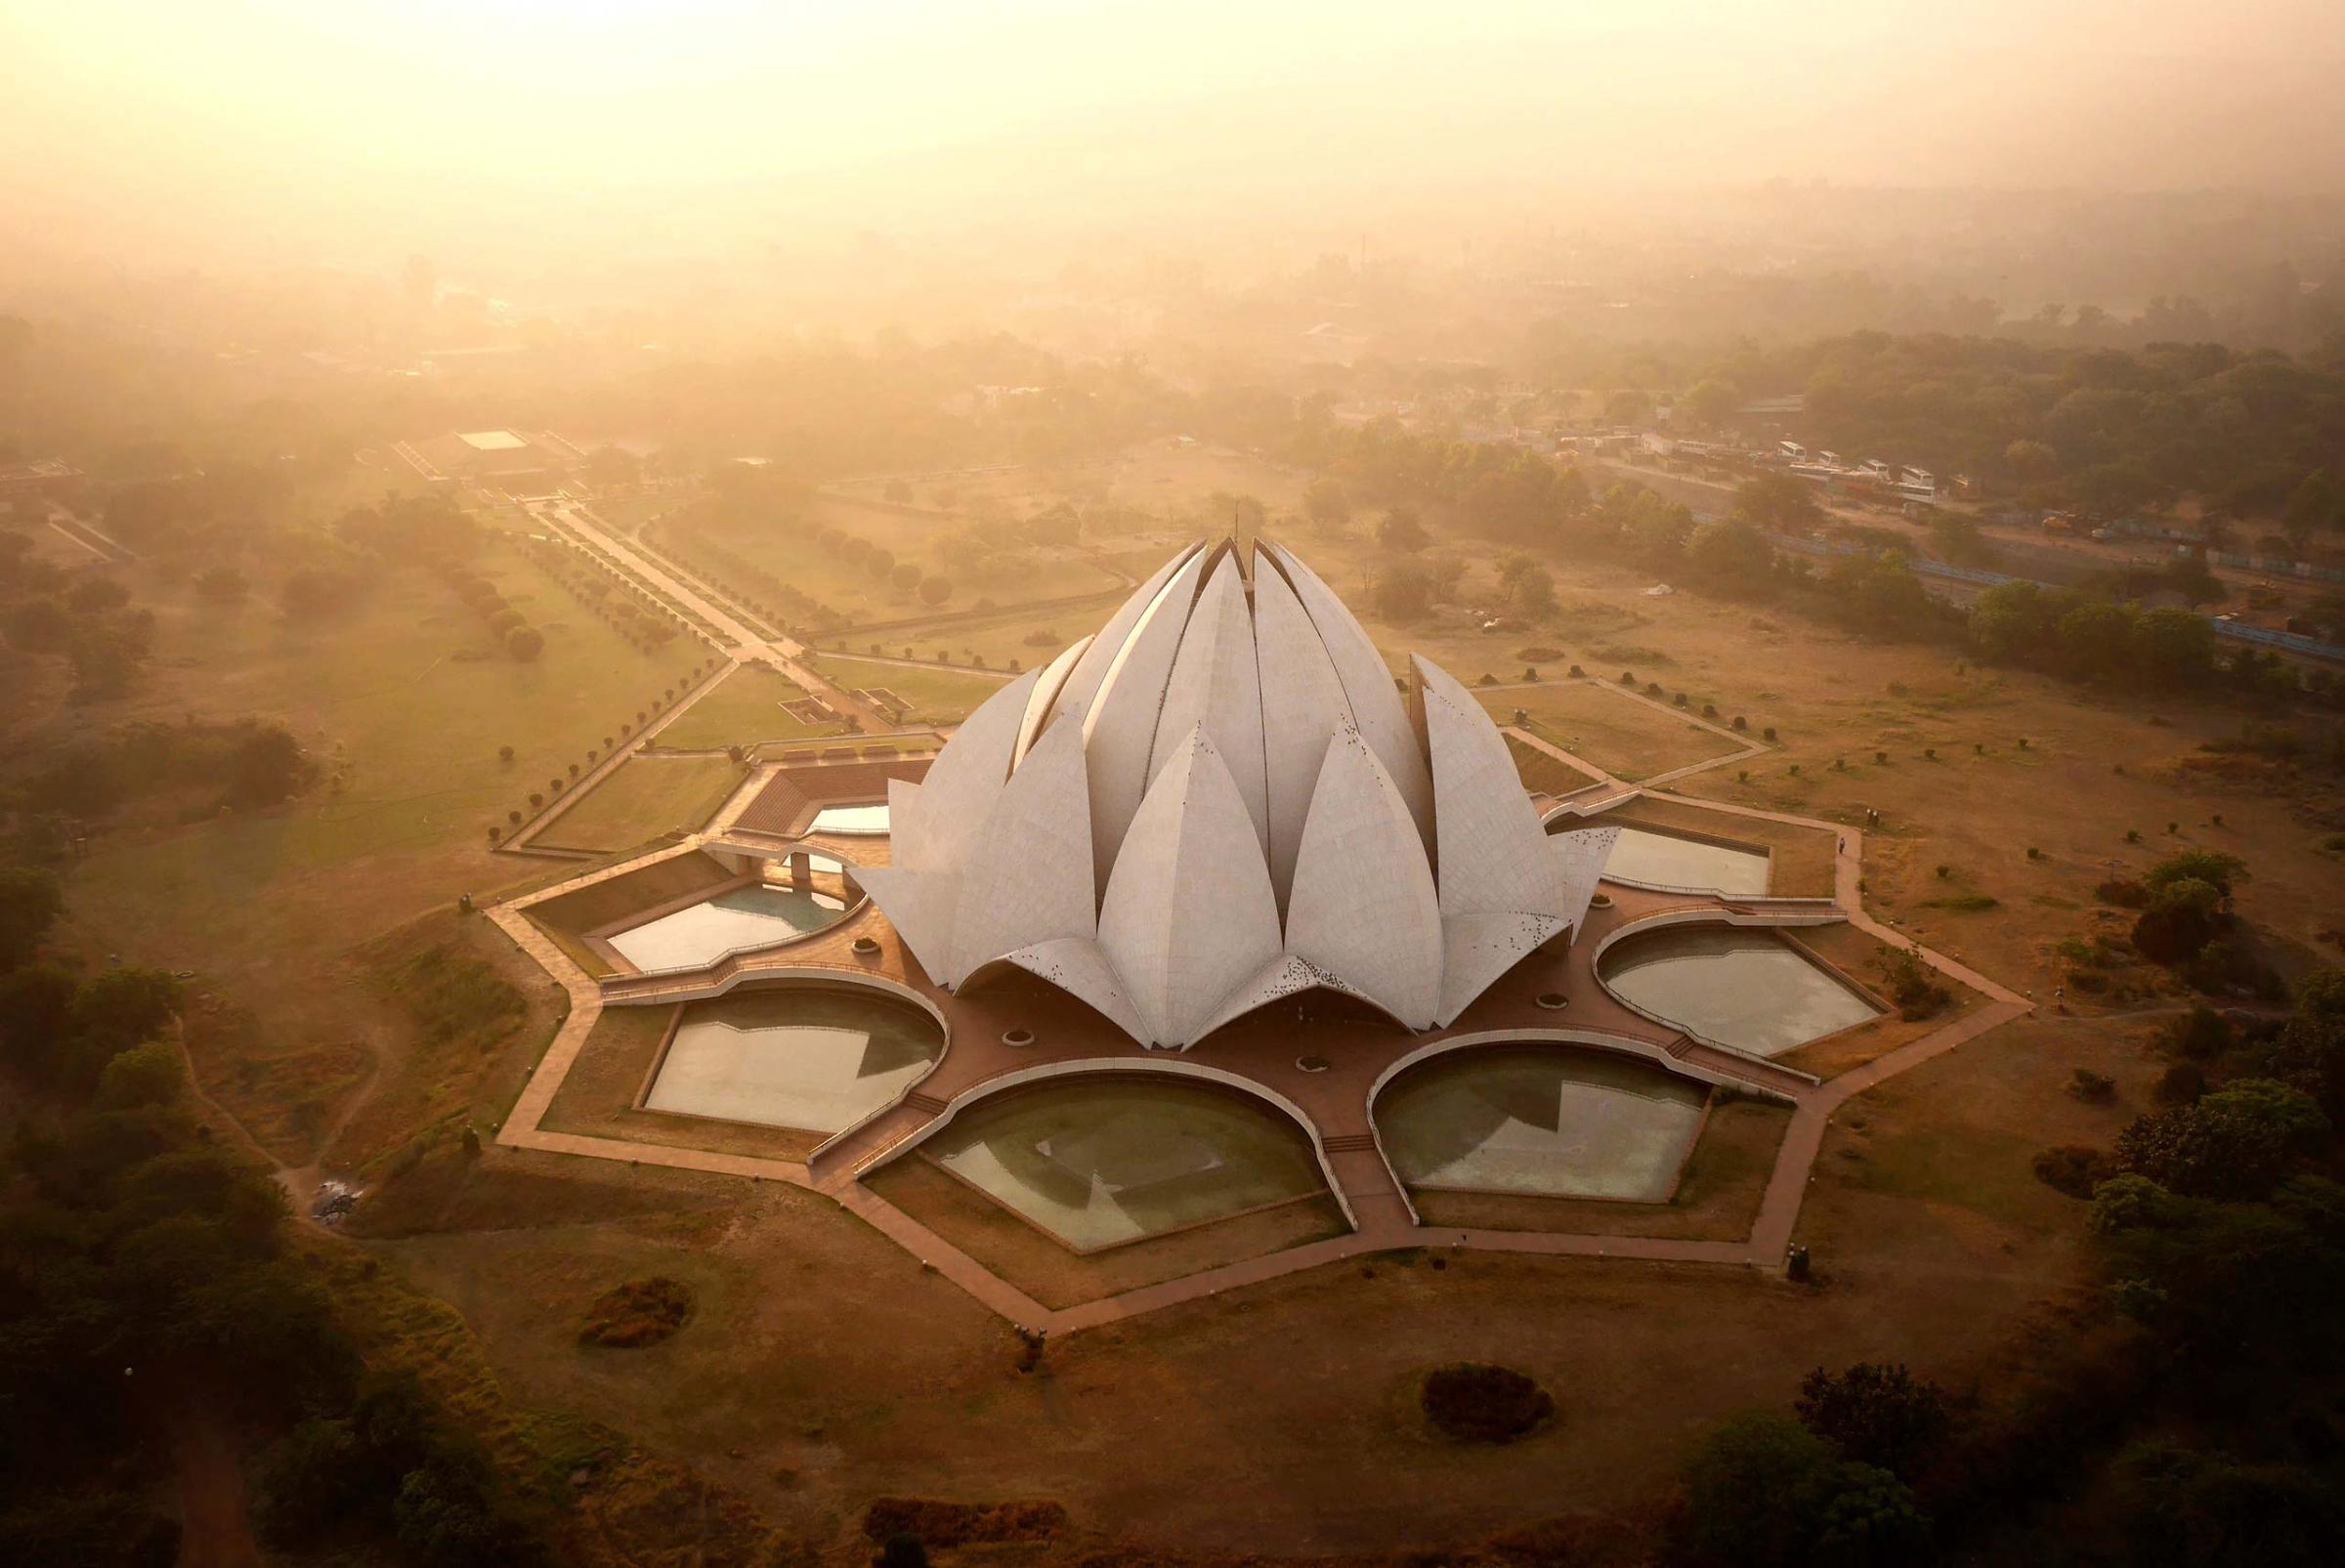 Lotus Temple - New Delhi, India